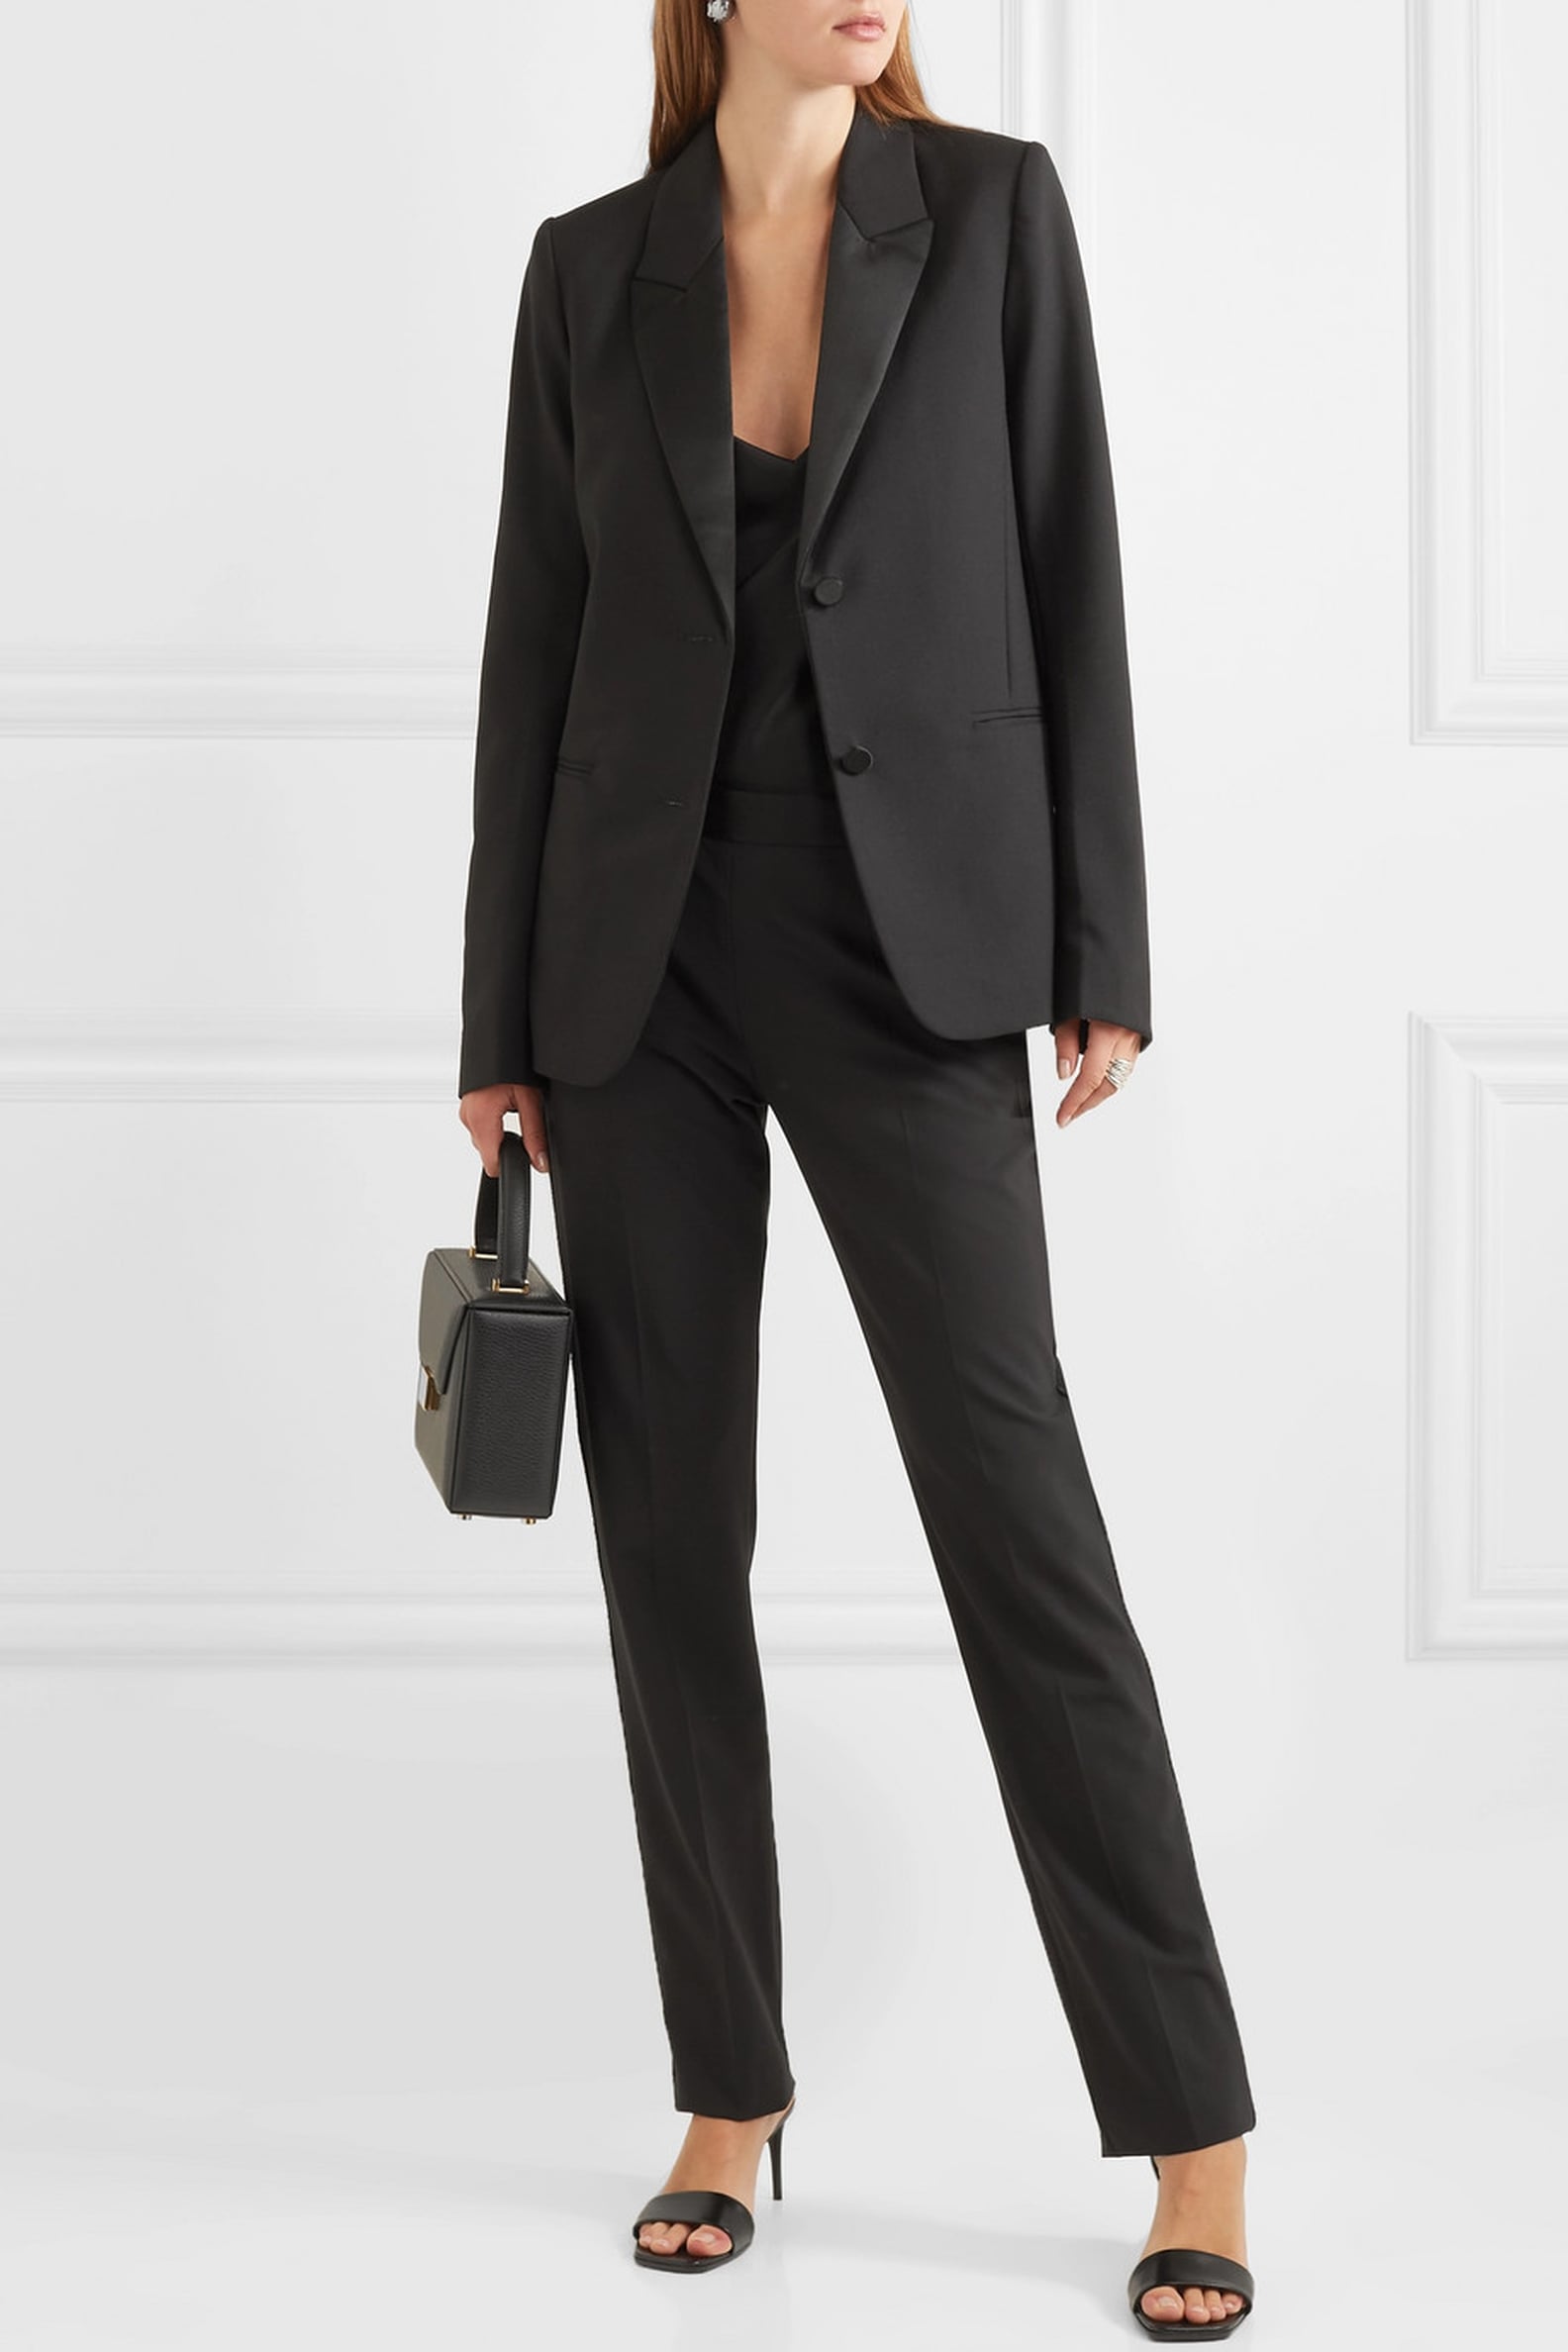 Victoria Beckham and Her Mom in Suits 2018 | POPSUGAR Fashion